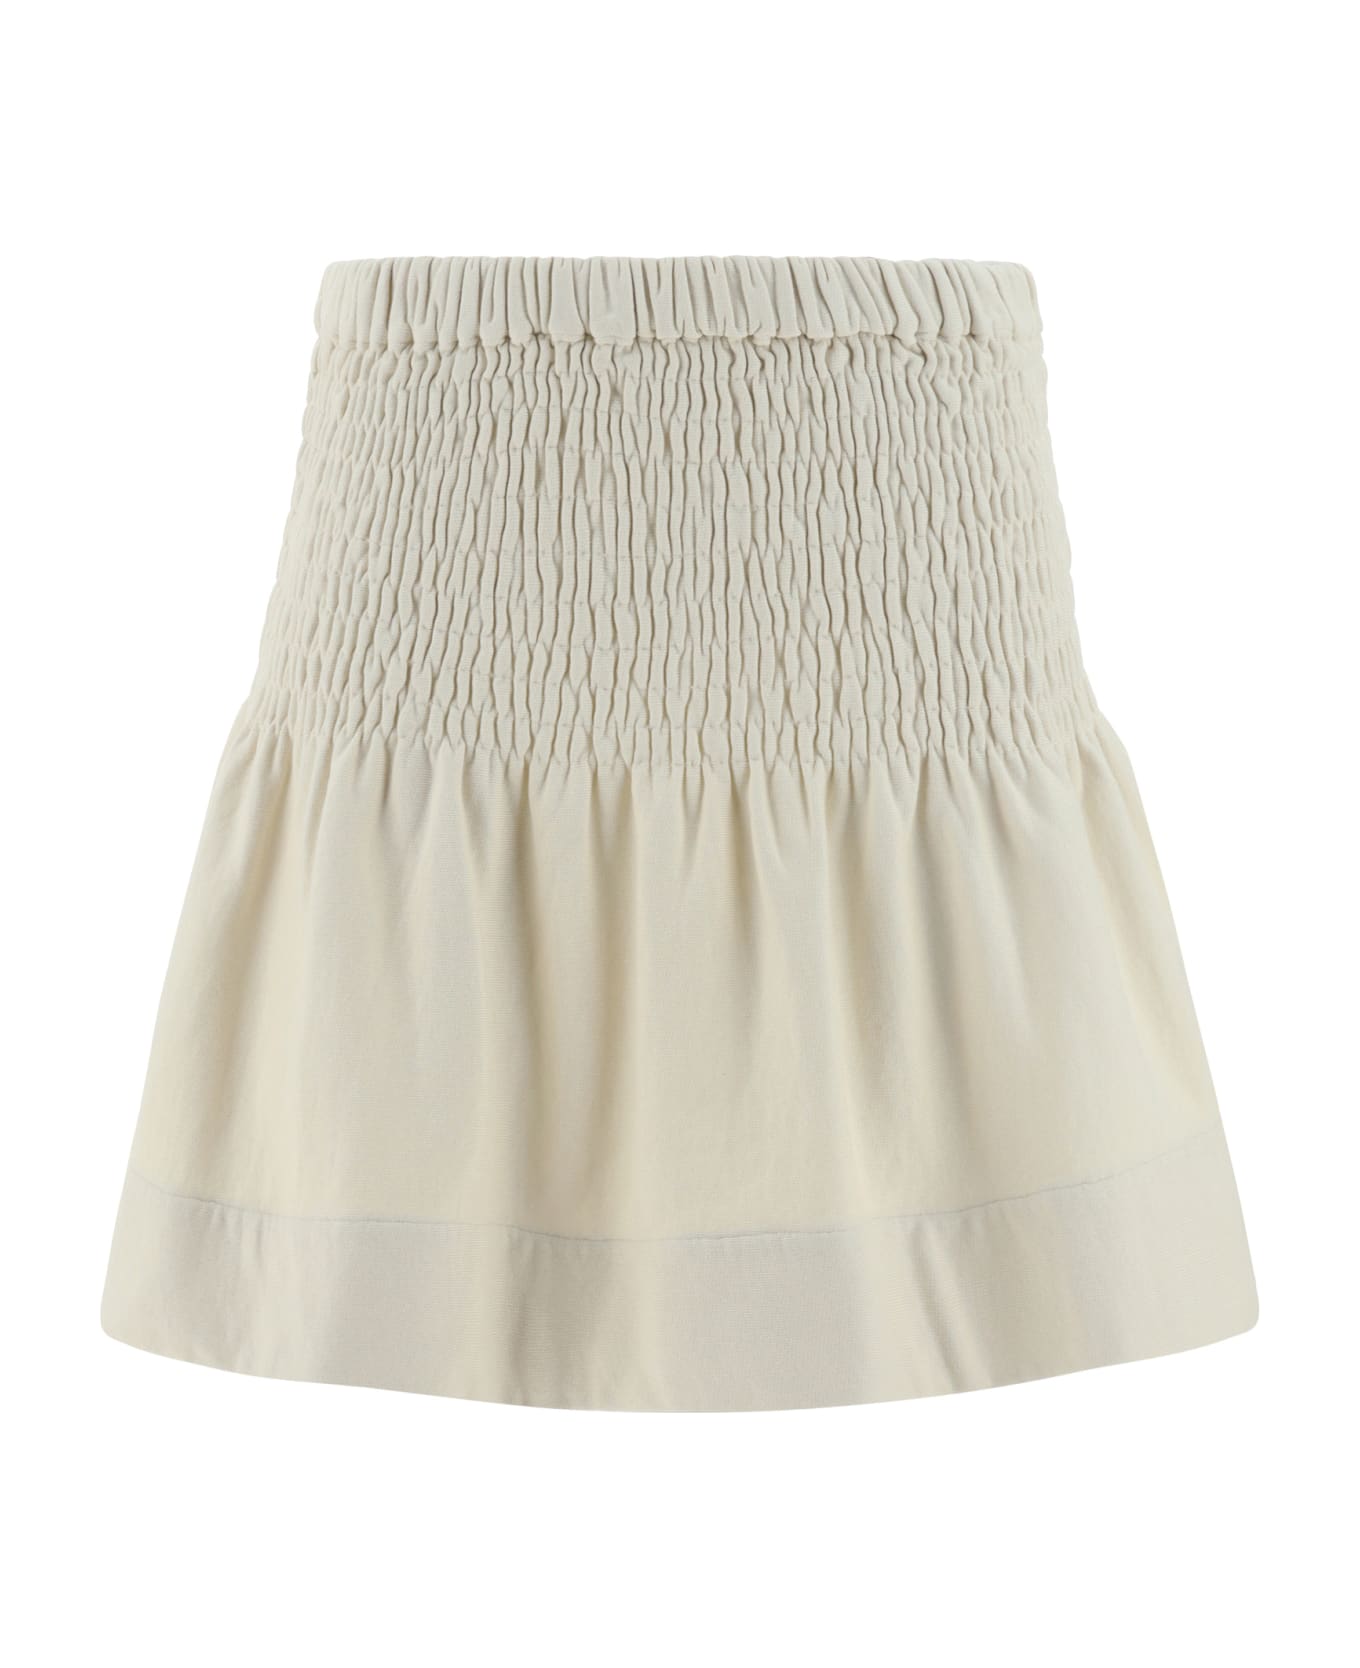 Marant Étoile Pacifica Mini Skirt - Ecru